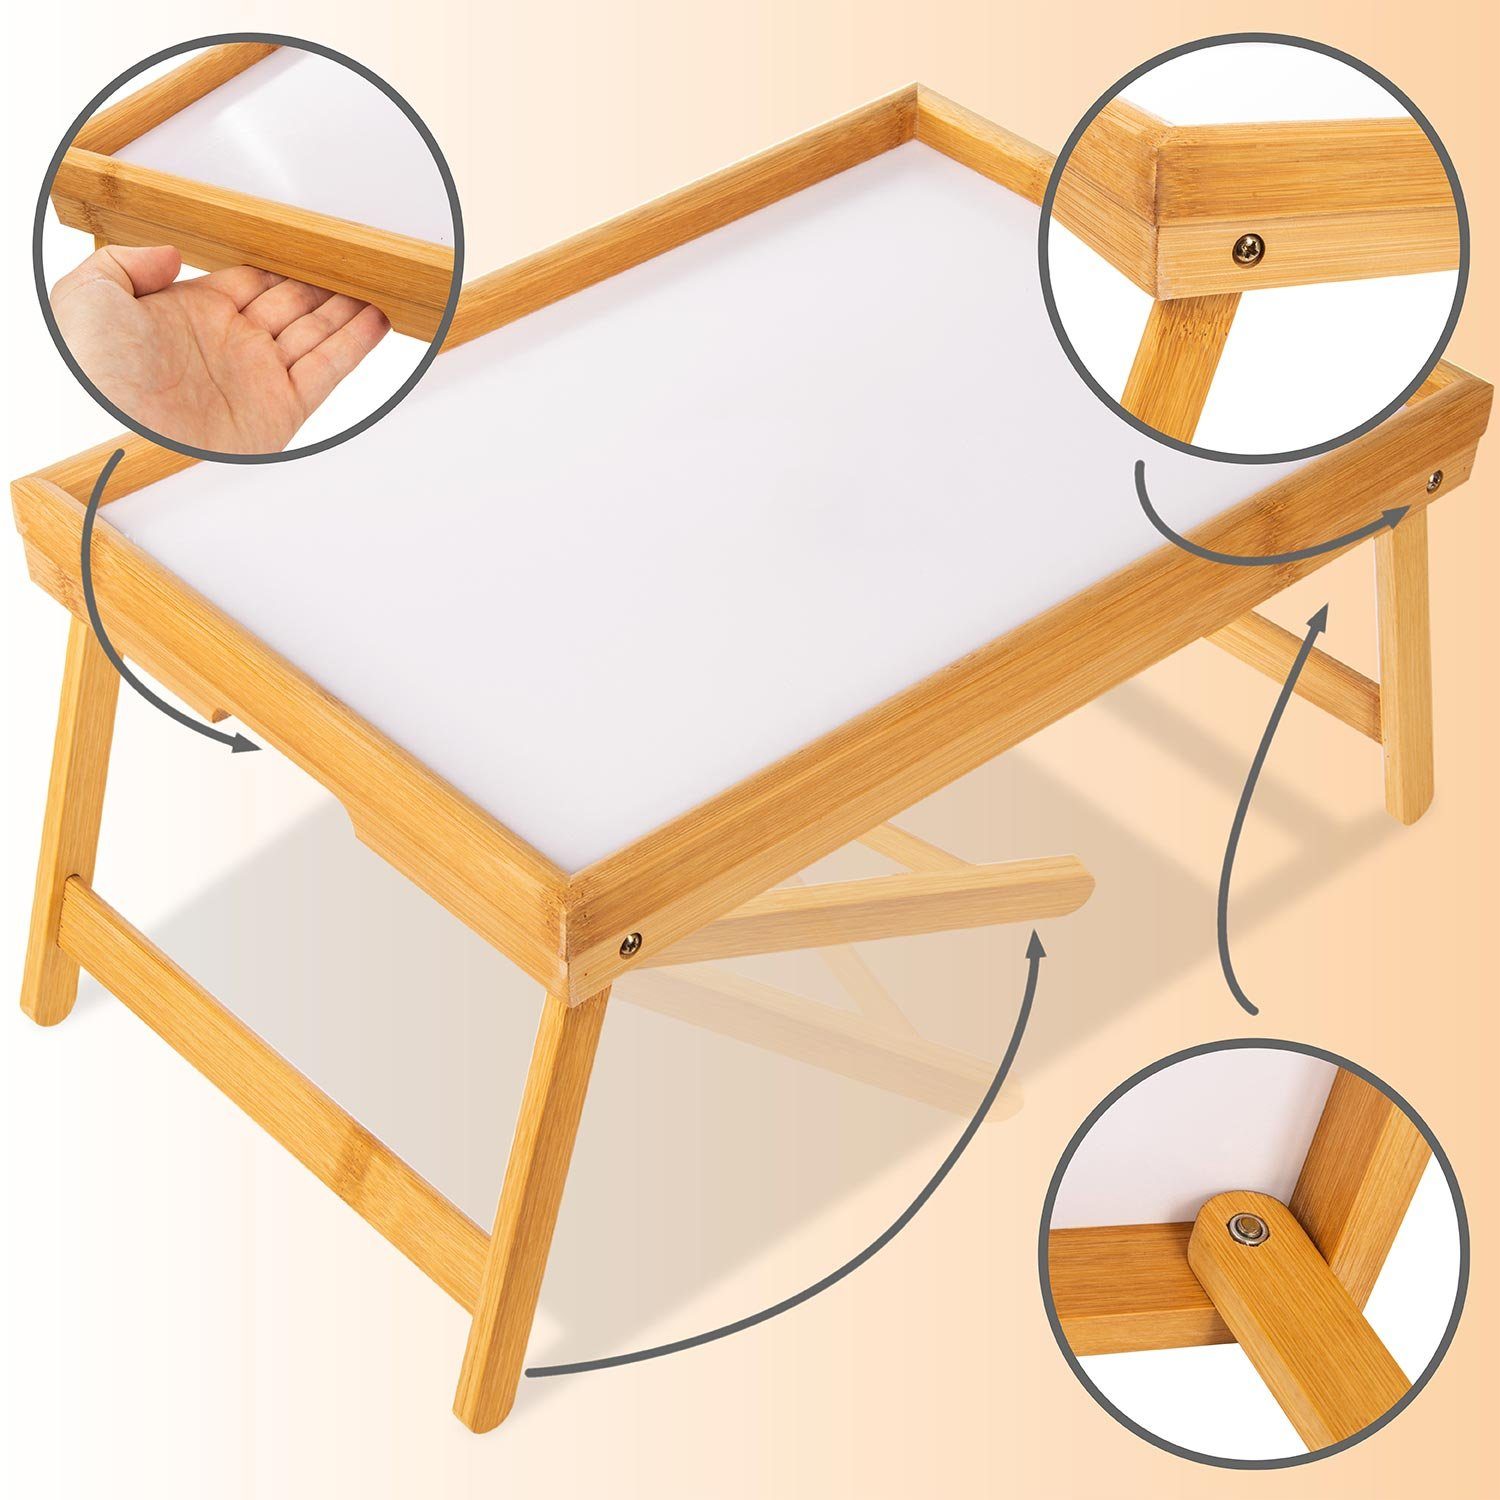 Tabletttisch Bett-Tablett, Holz Bambus Frühstückstablett Dimono Serviertablett Betttisch